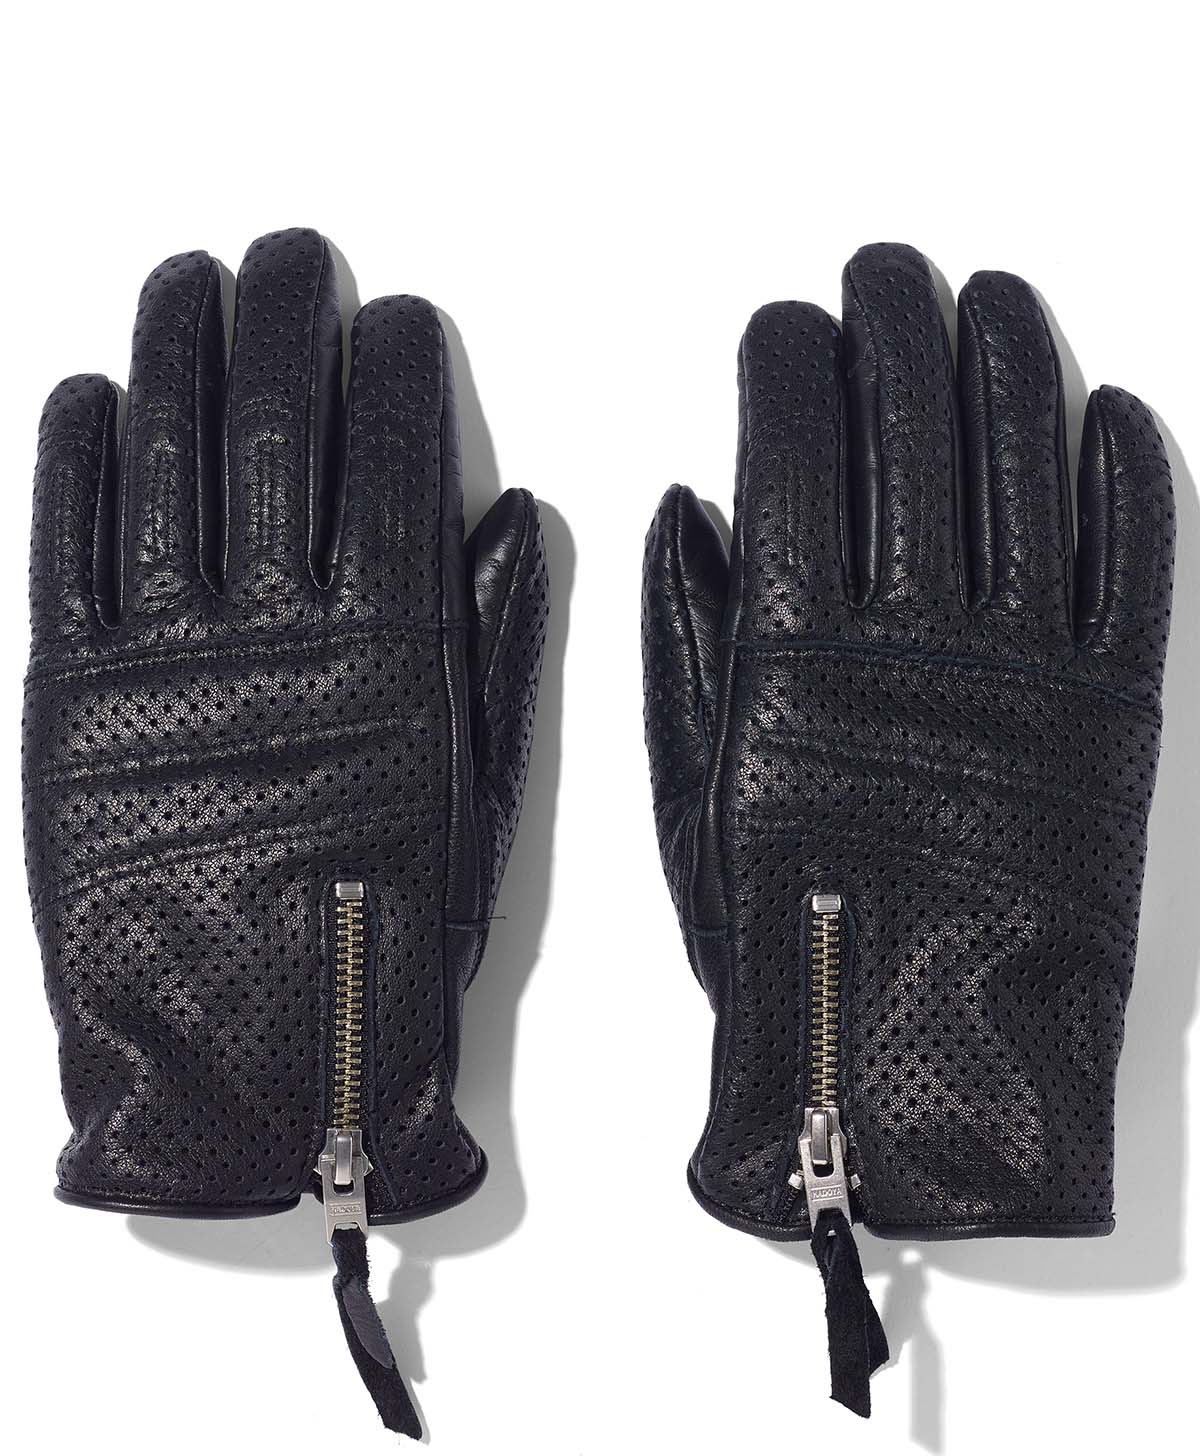 ROX Glove -pl / Black (Women's)